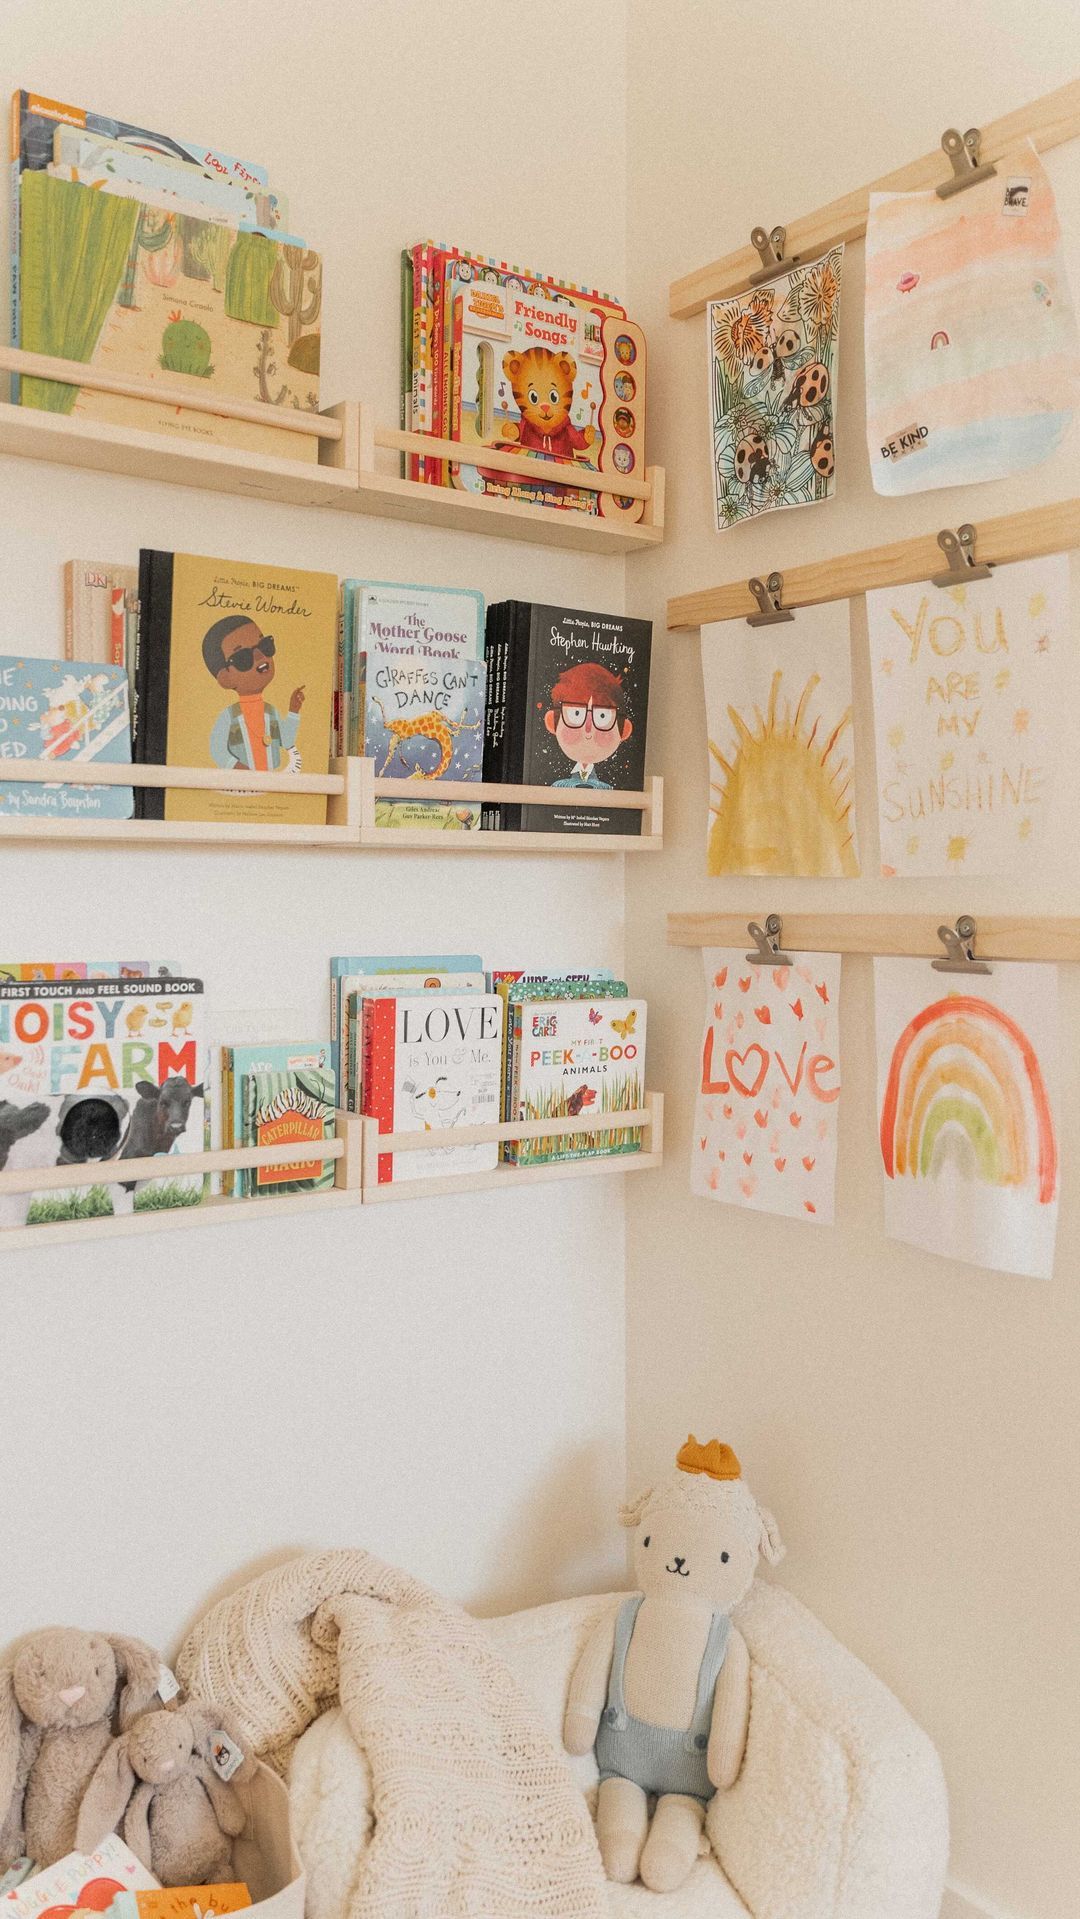 Creative Ways to Maximize Kids Room
Storage